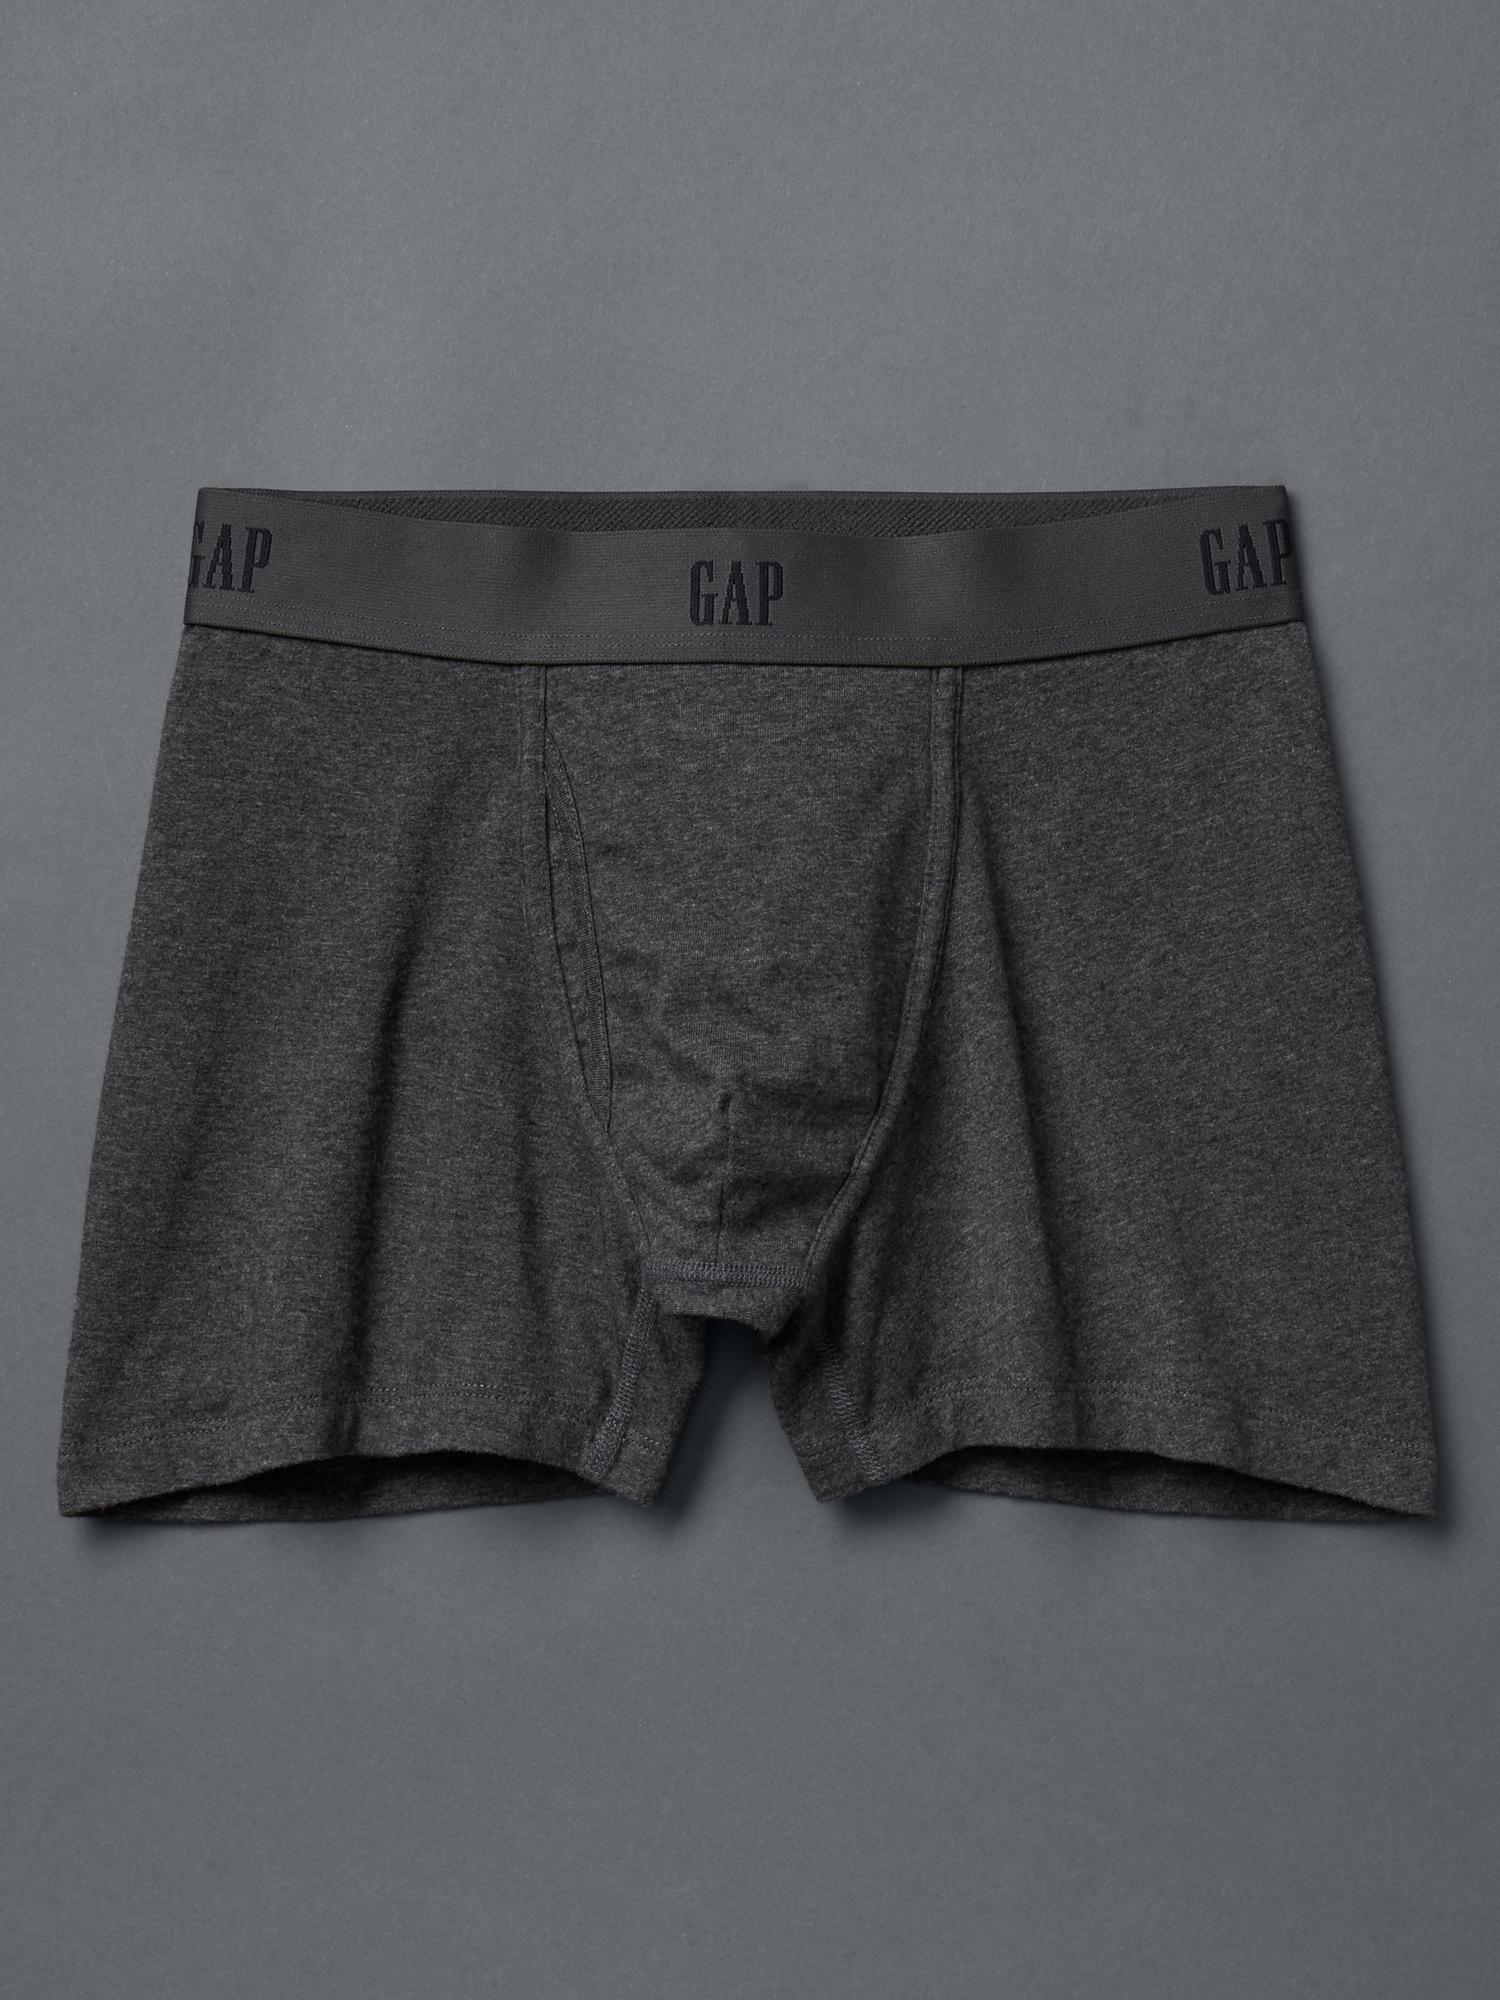 GAP Mens 3-Pack Boxer Brief Underpants Underwear Black Floral S at   Men's Clothing store